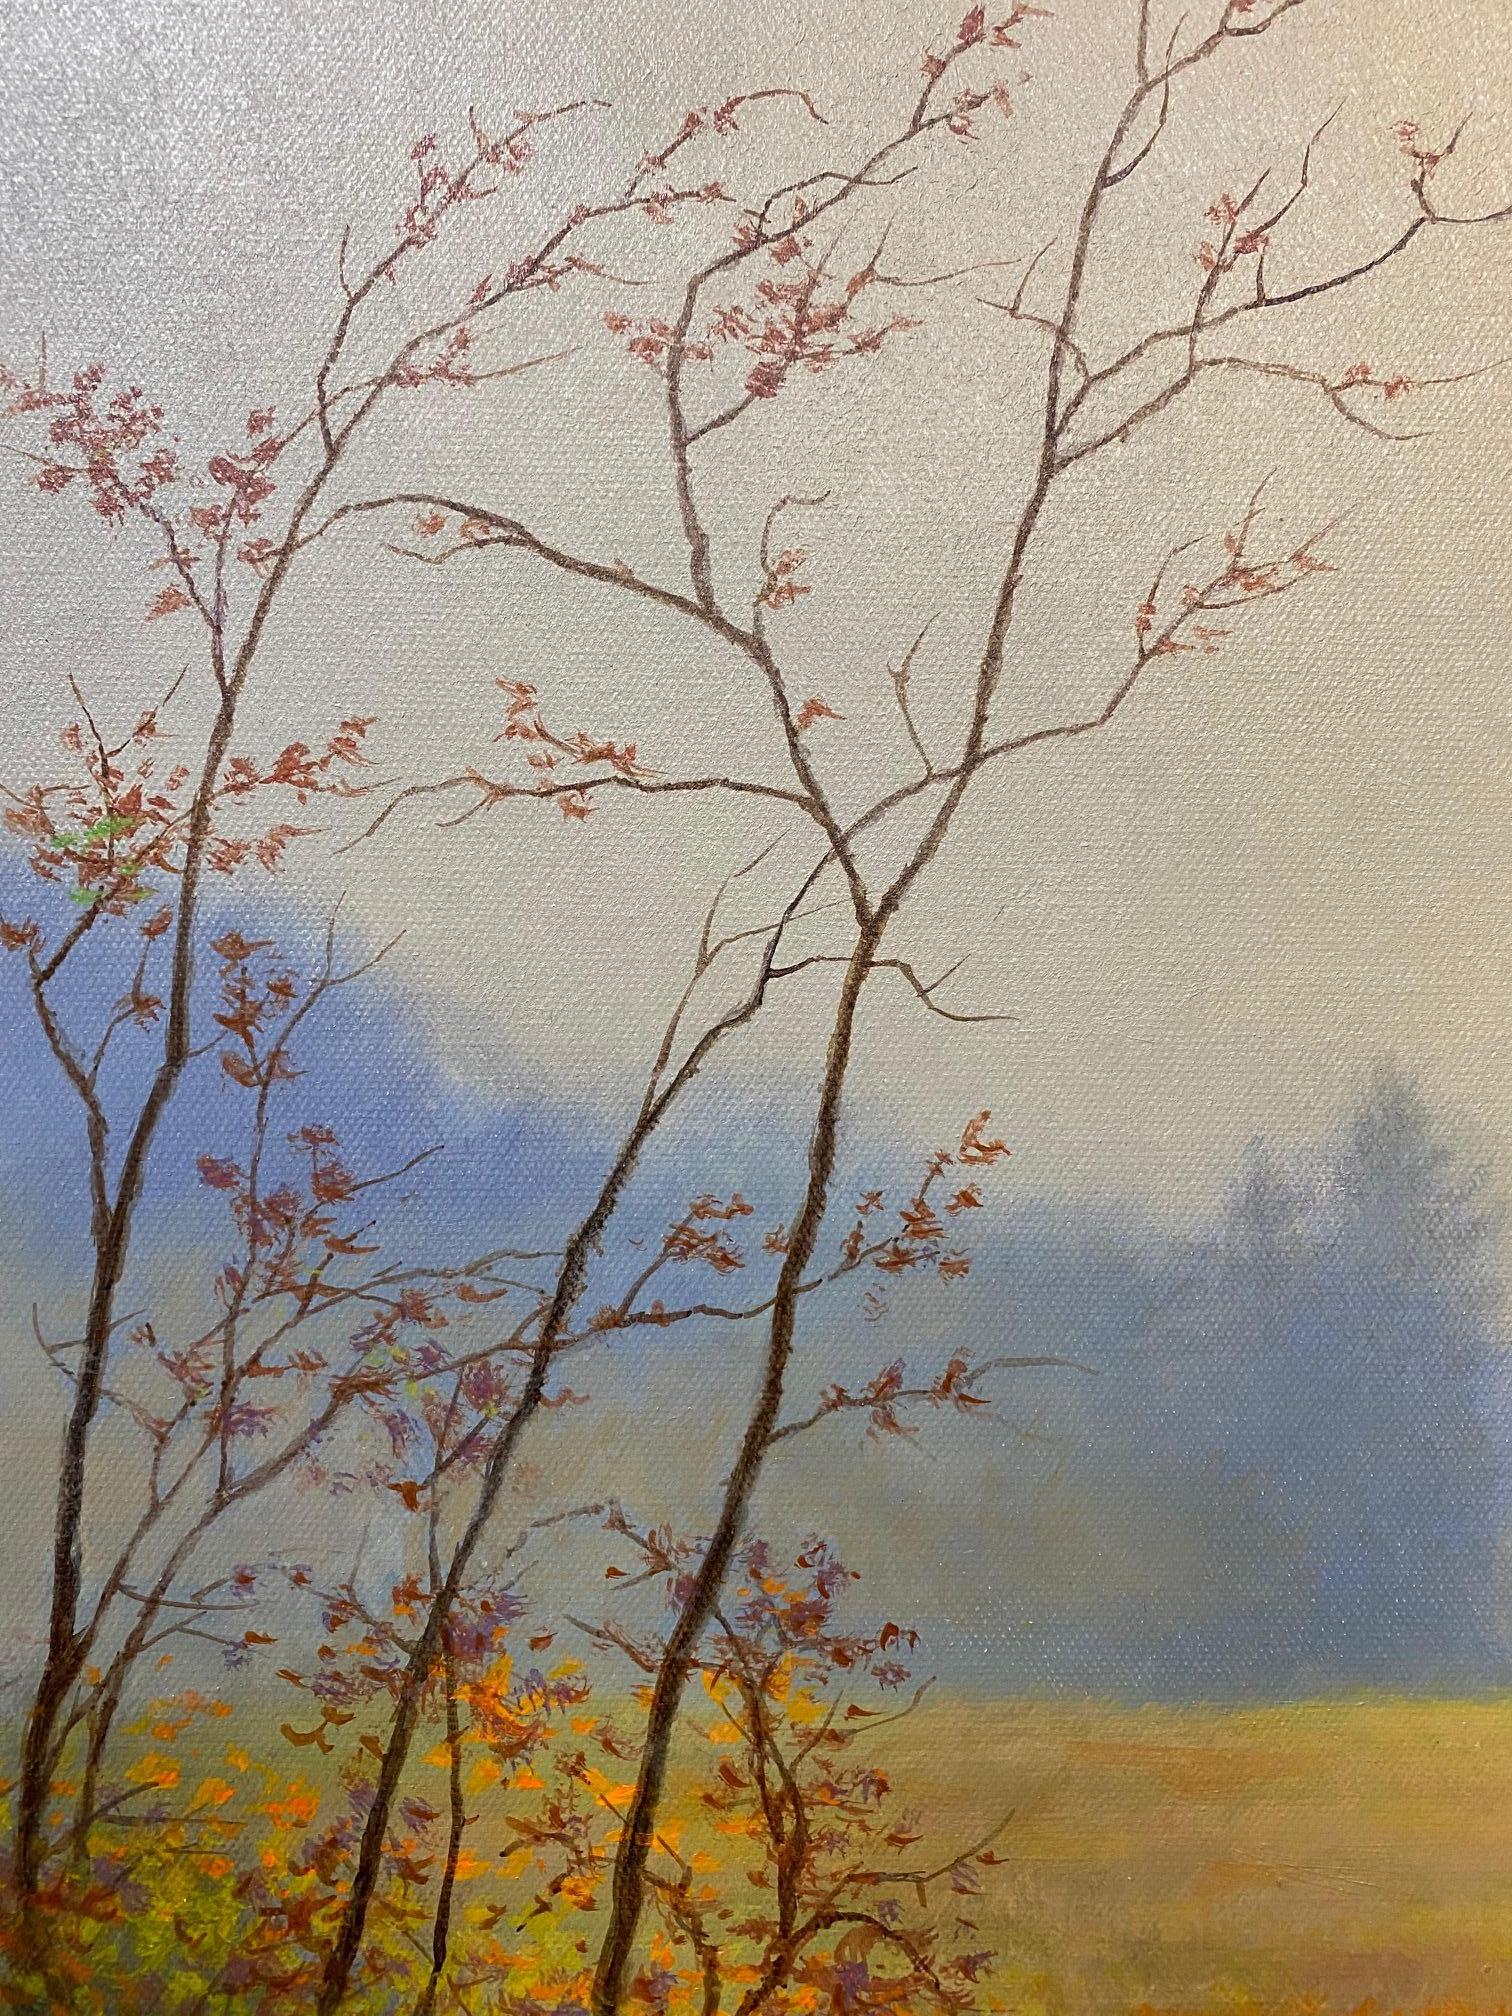 October Sun, original 30x24 realist landscape - Brown Landscape Painting by Barry DeBaun